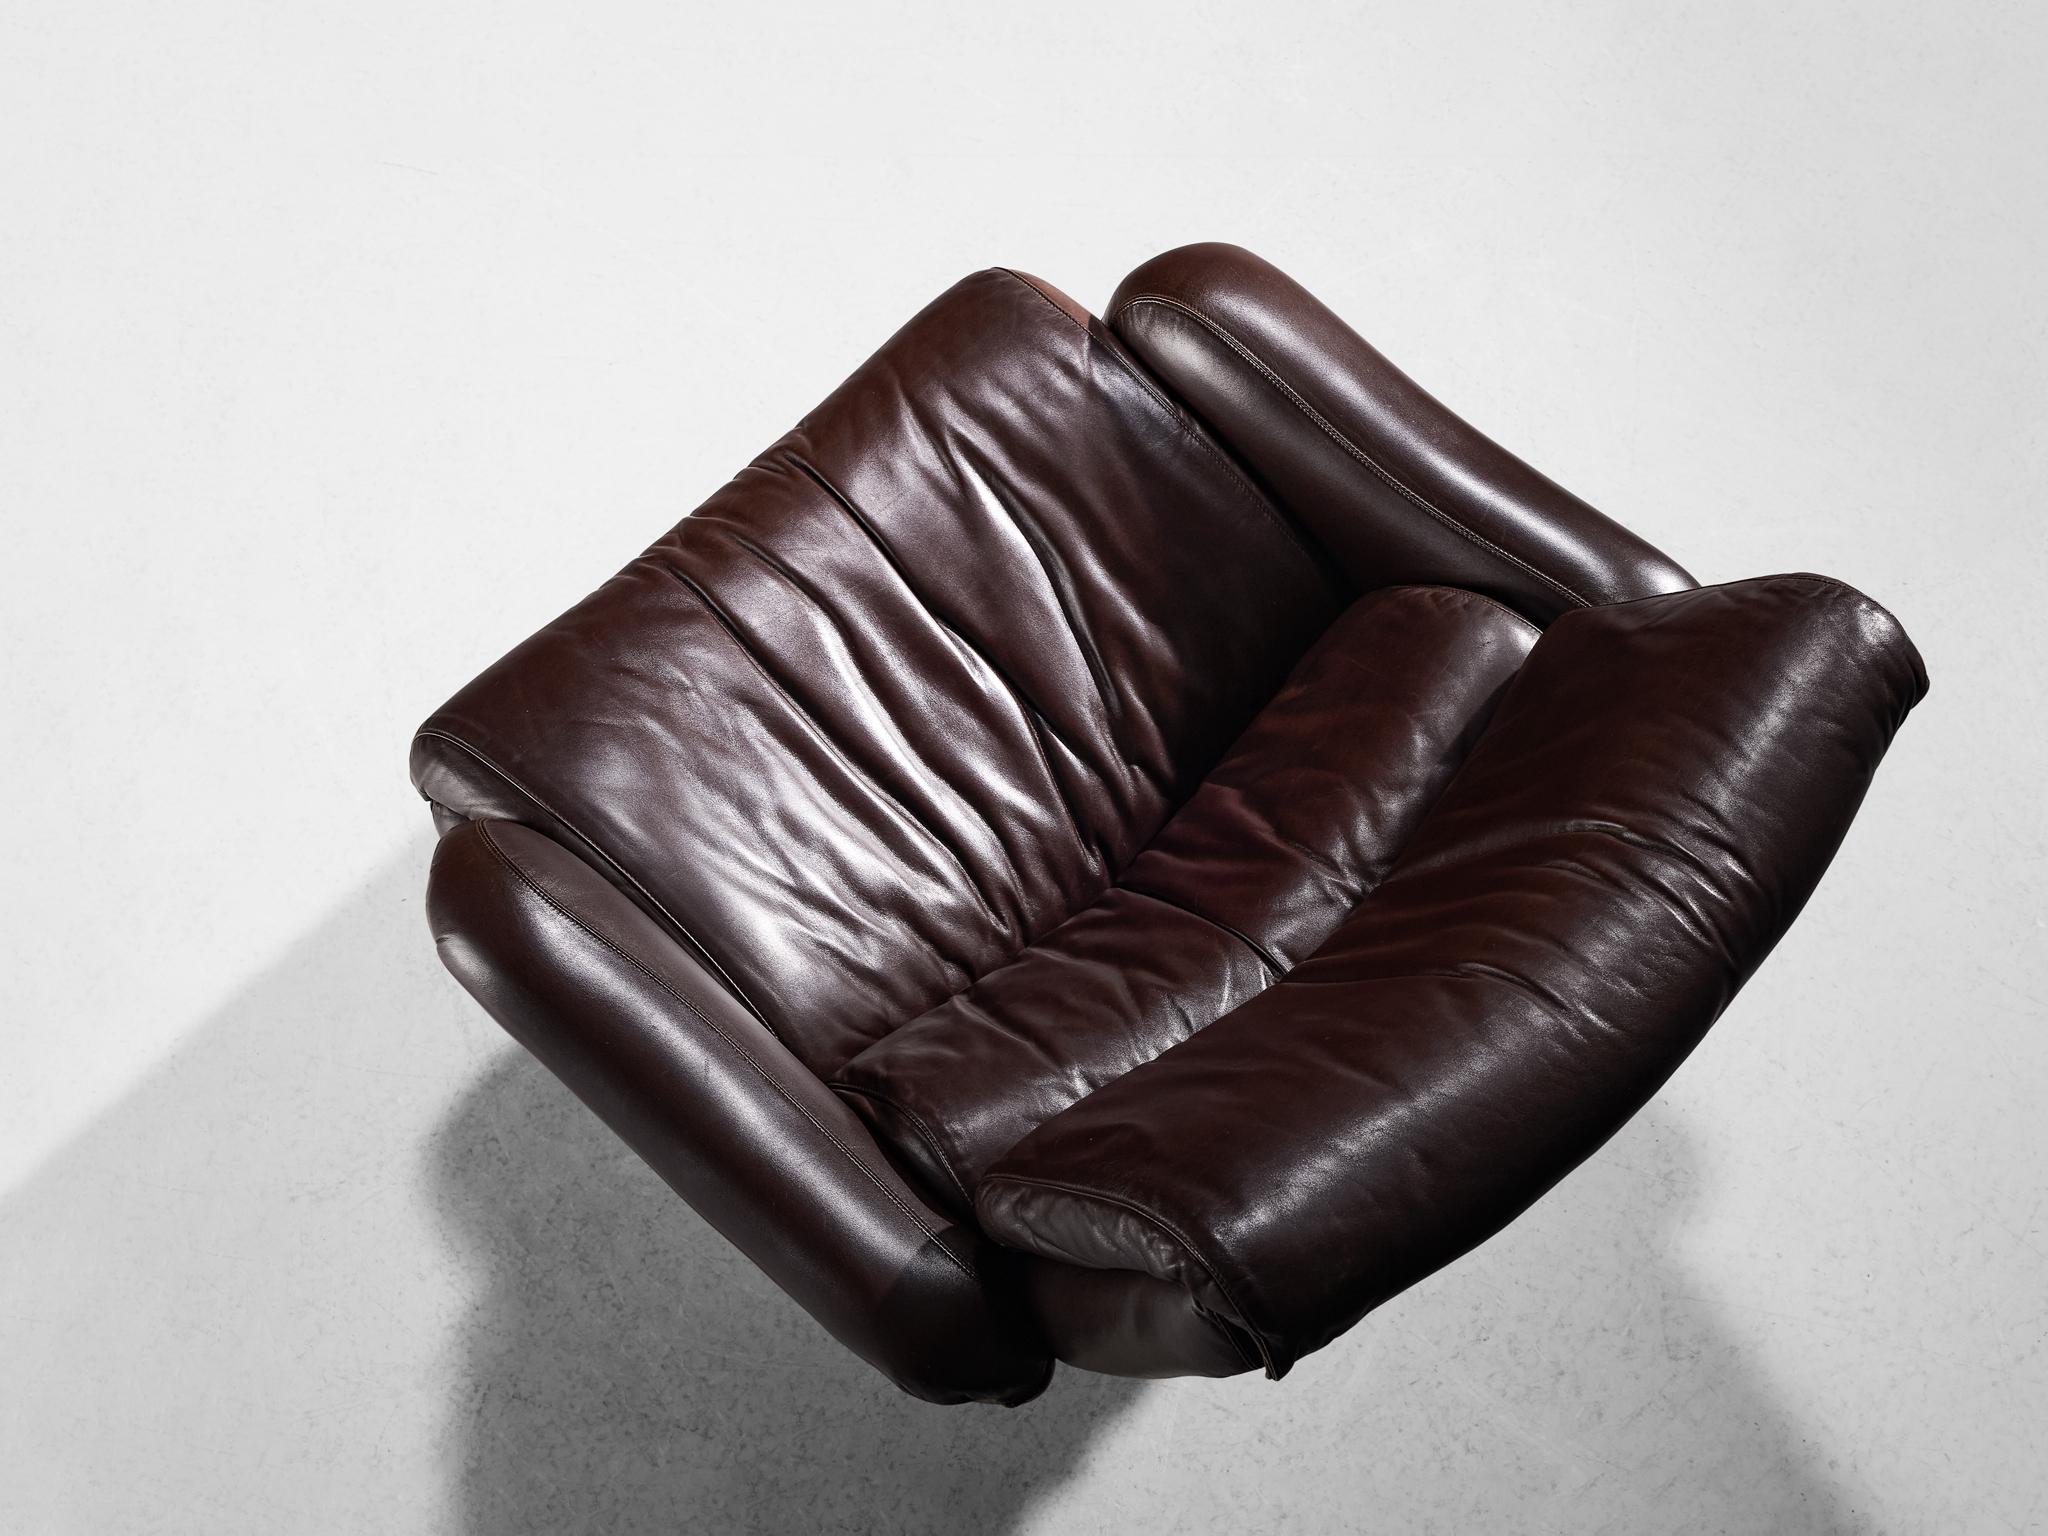 Fiberglass Yrjö Kukkapuro for Haimi 'Saturnus' Lounge Chair in Brown Leather